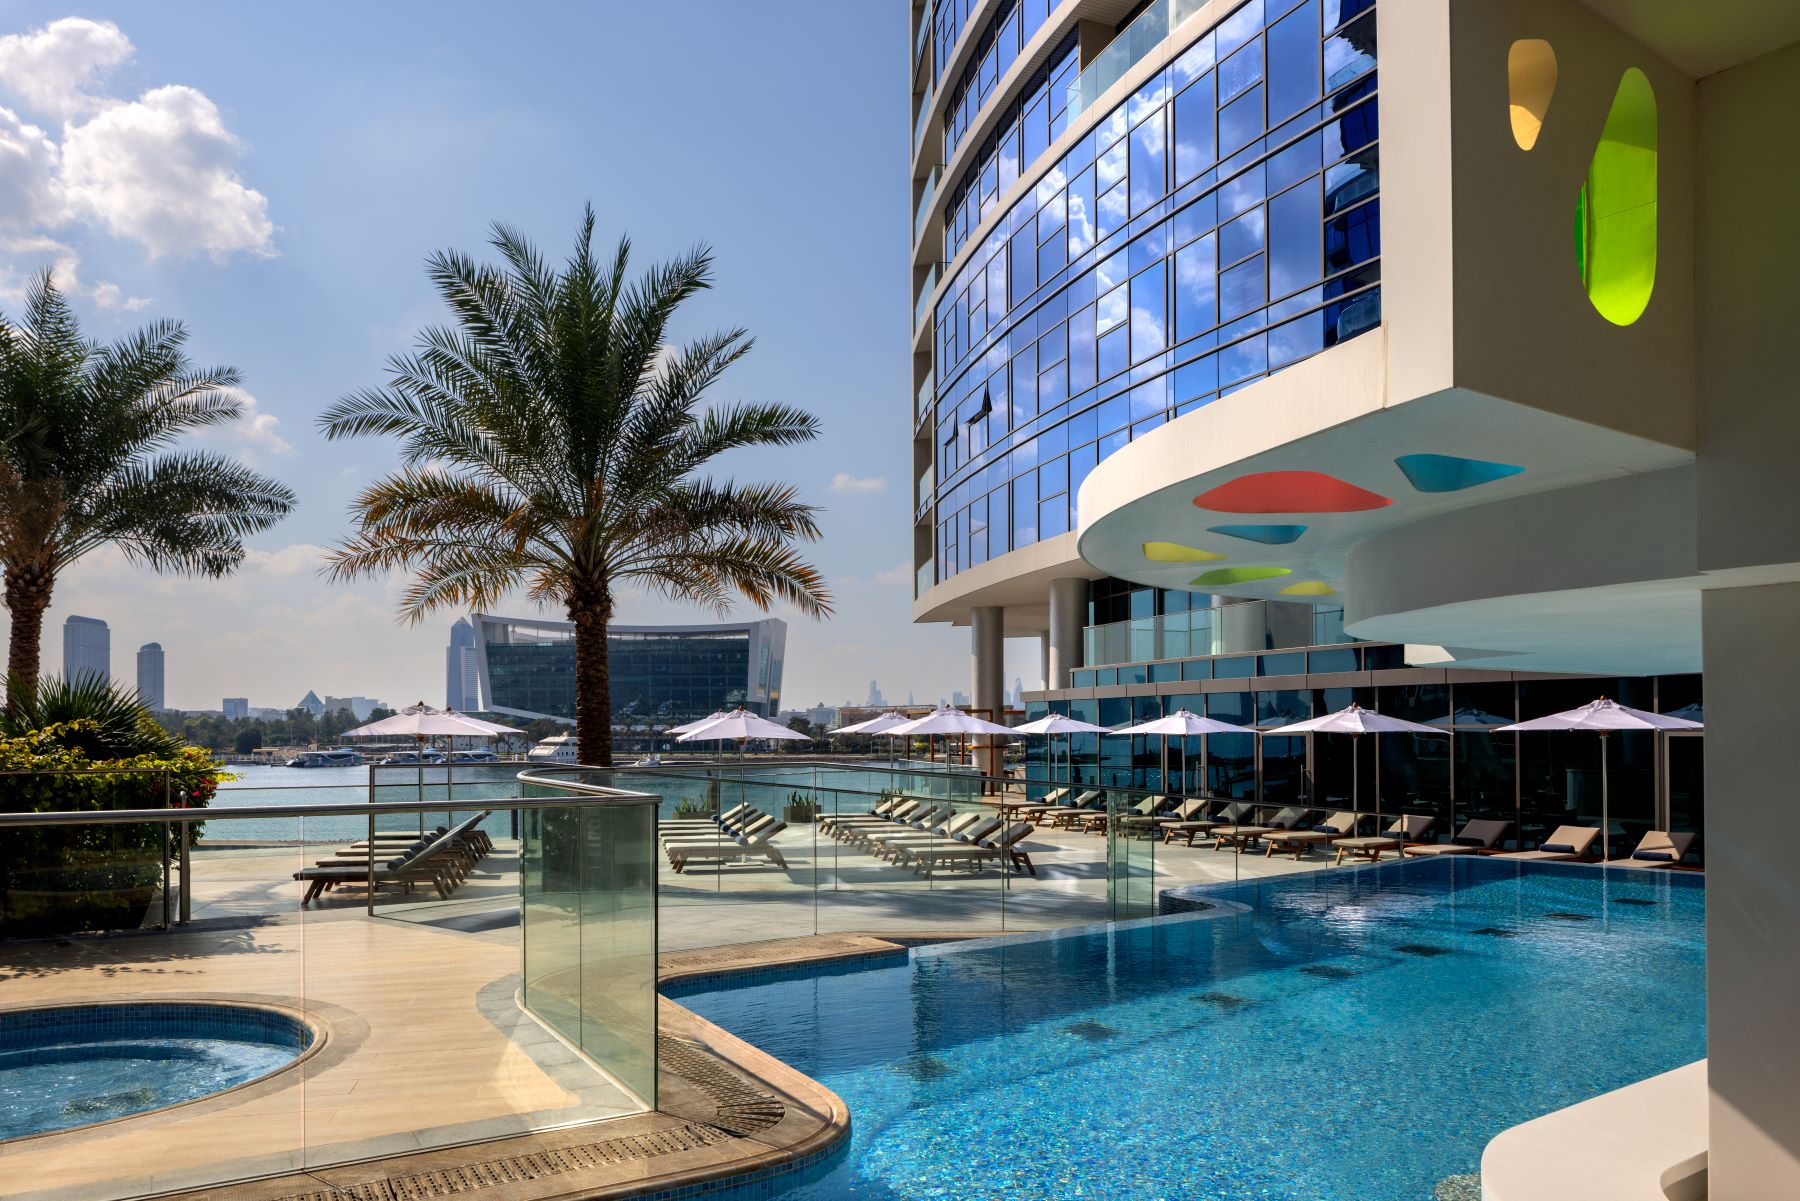 Hilton Dubai Creek Hotel & Residences opens in Jewel of the Creek development